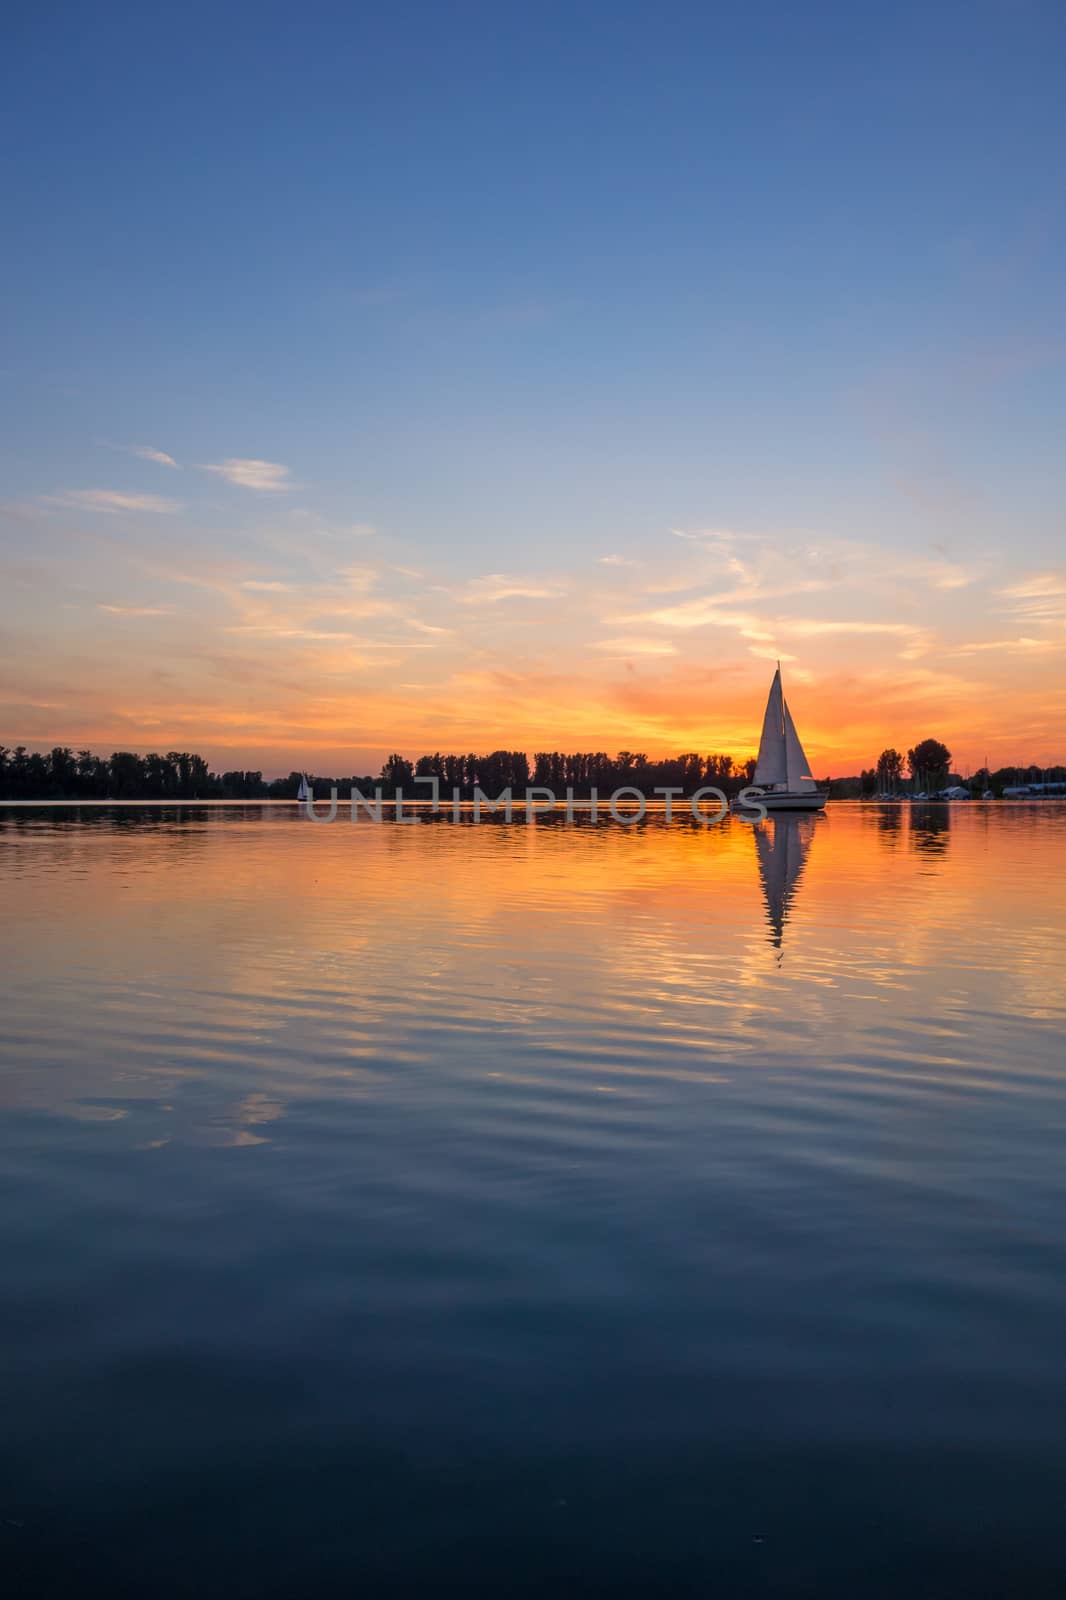 sunrise / sunset at a lake with sailing boats